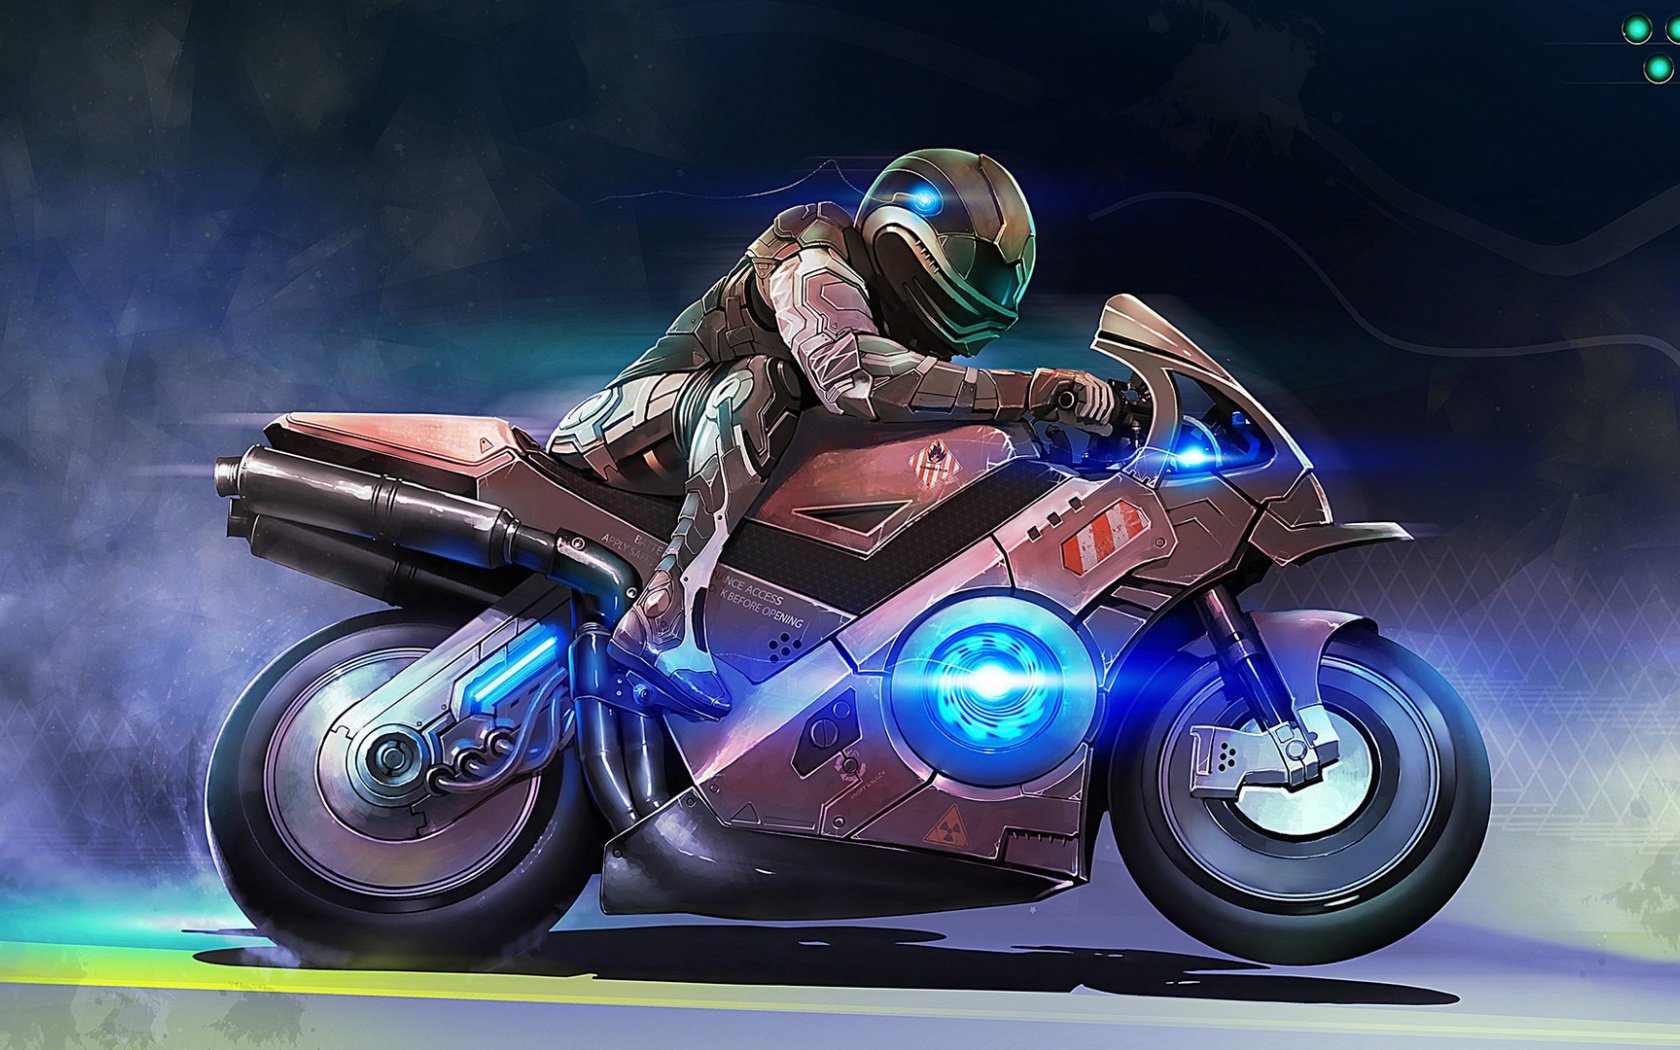 Description Free download Cool Motorcycle Art wallpaper desktop